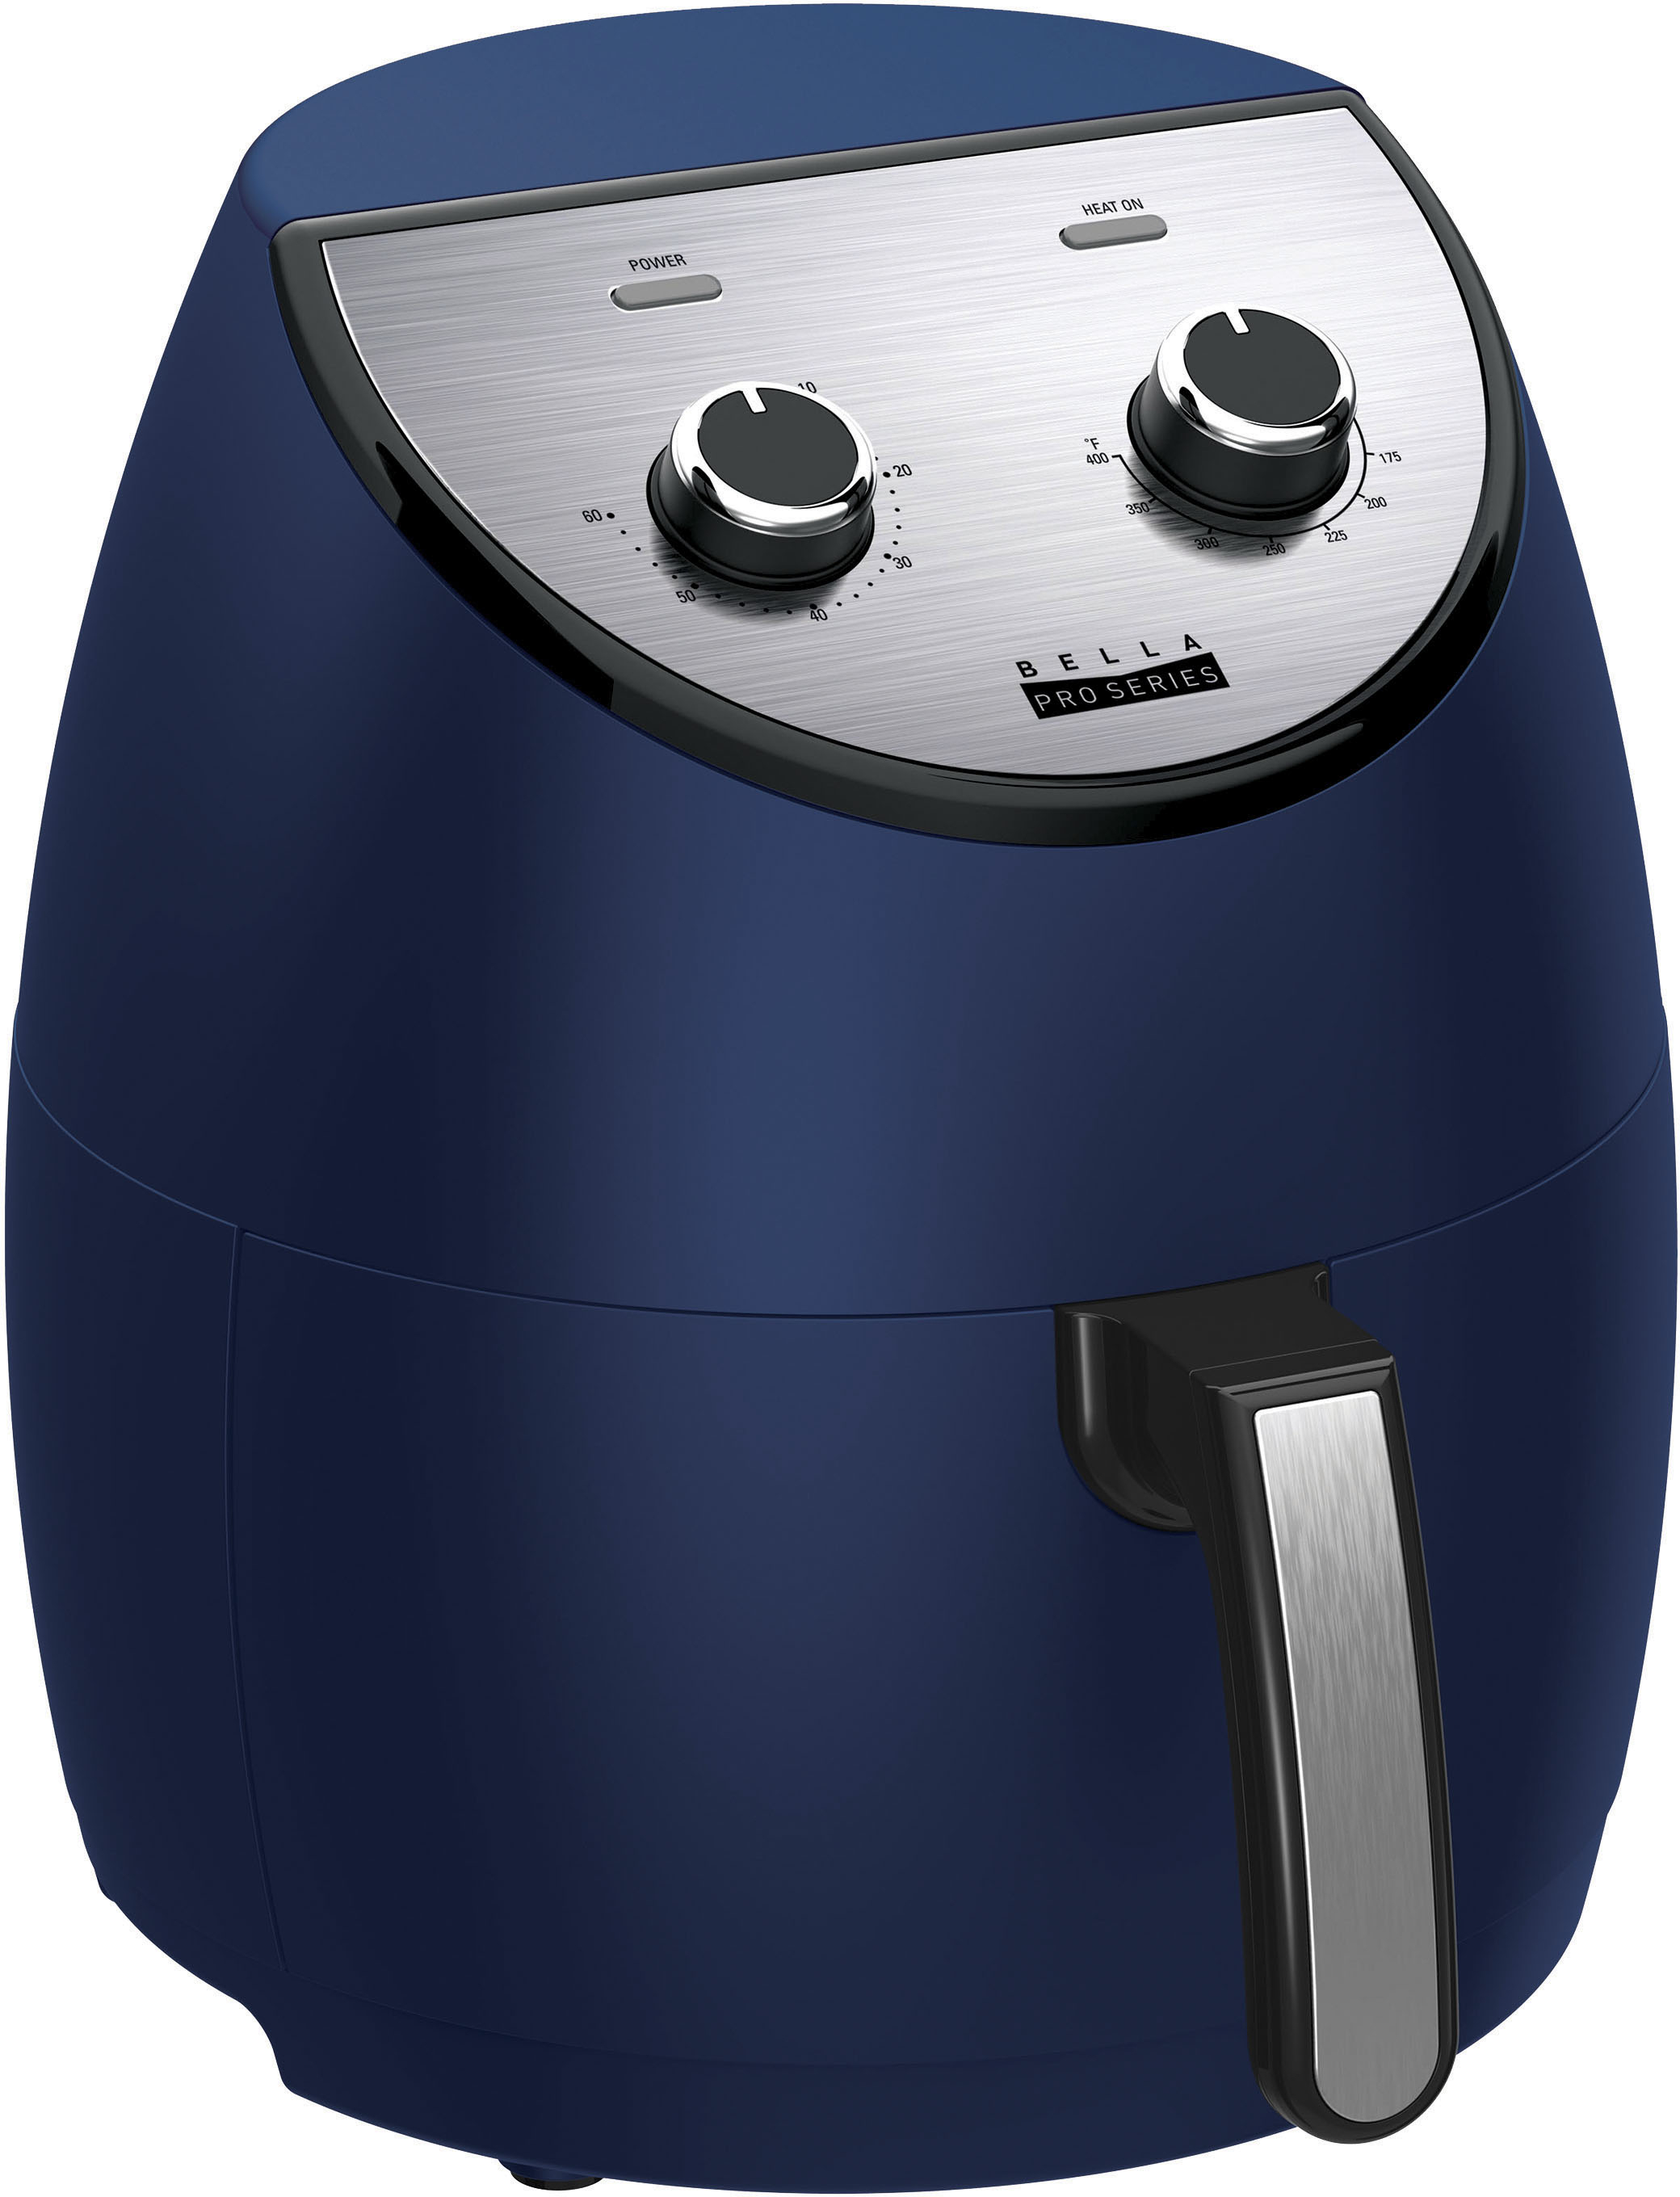 Bella Pro Series – 4-qt. Digital Air Fryer in Matte Ink Blue $24.99 (Reg.  $69.99)